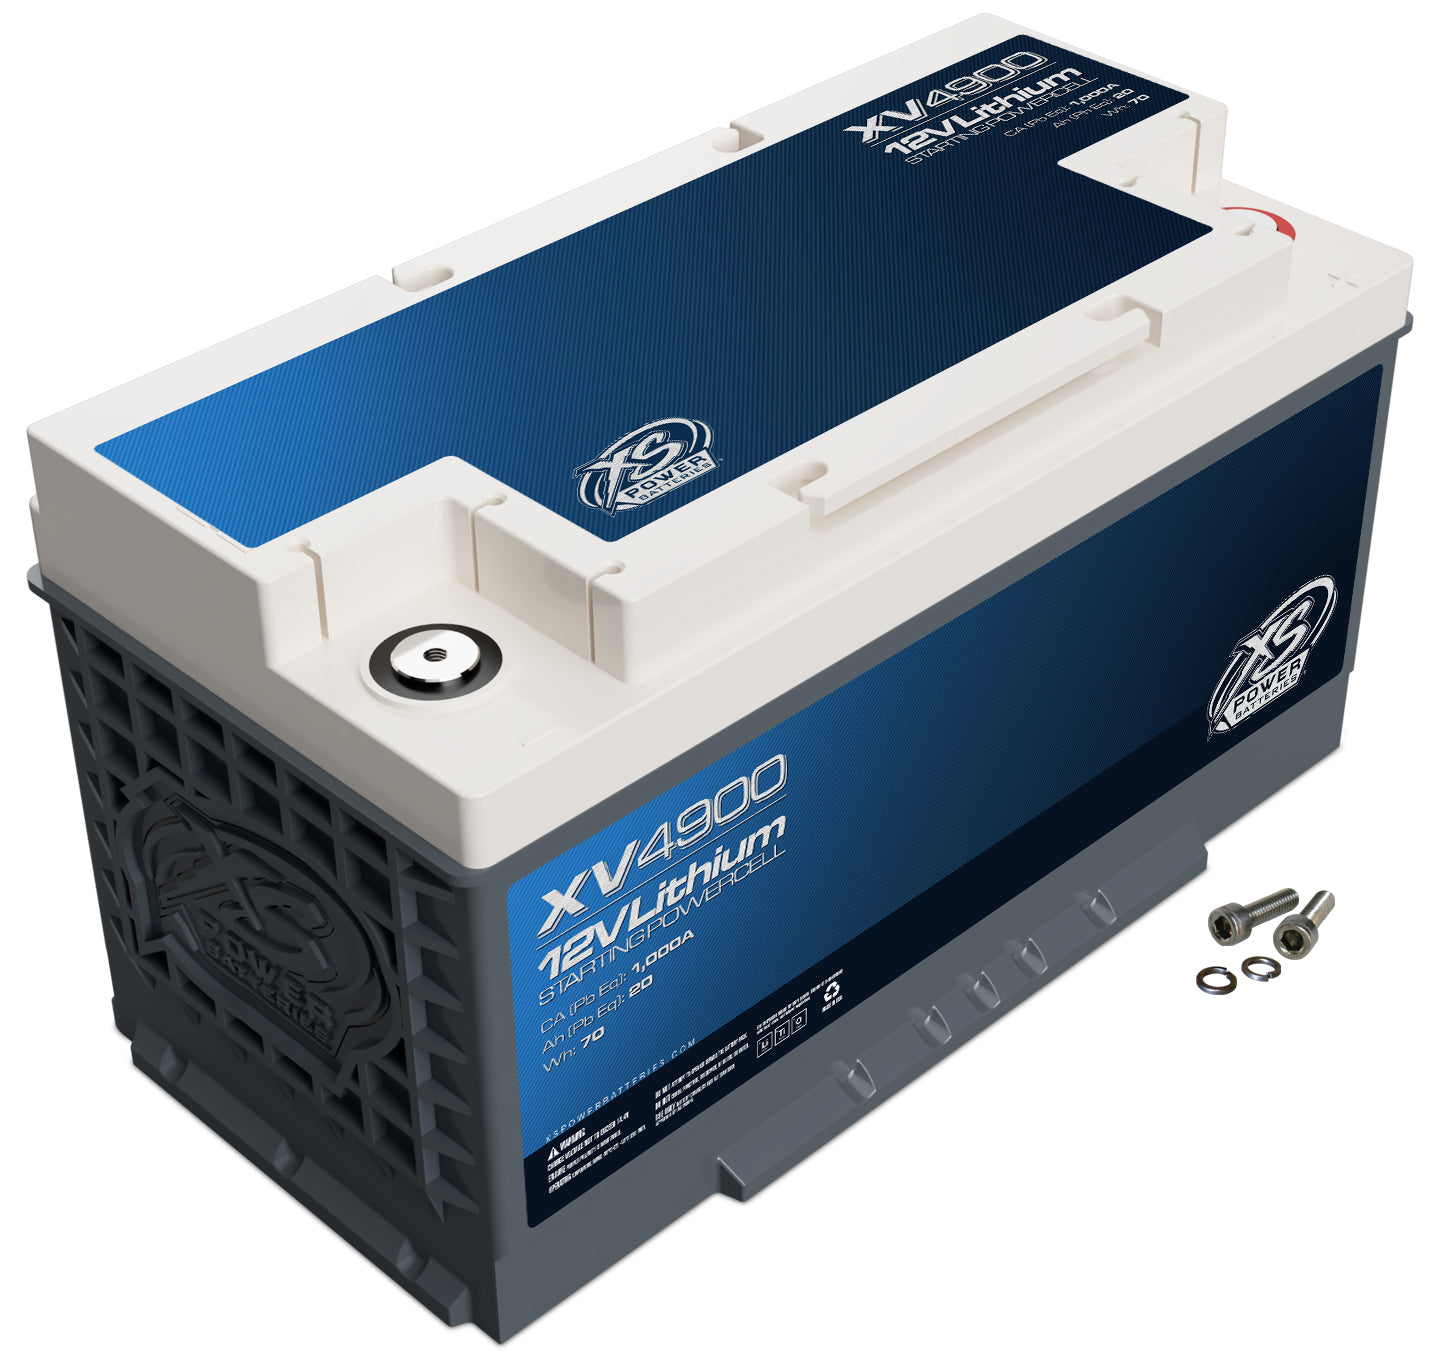 XV4900 XS Power 12VDC Group 49 Lithium LTO Underhood-Safe Vehicle Battery 1500W 70Wh